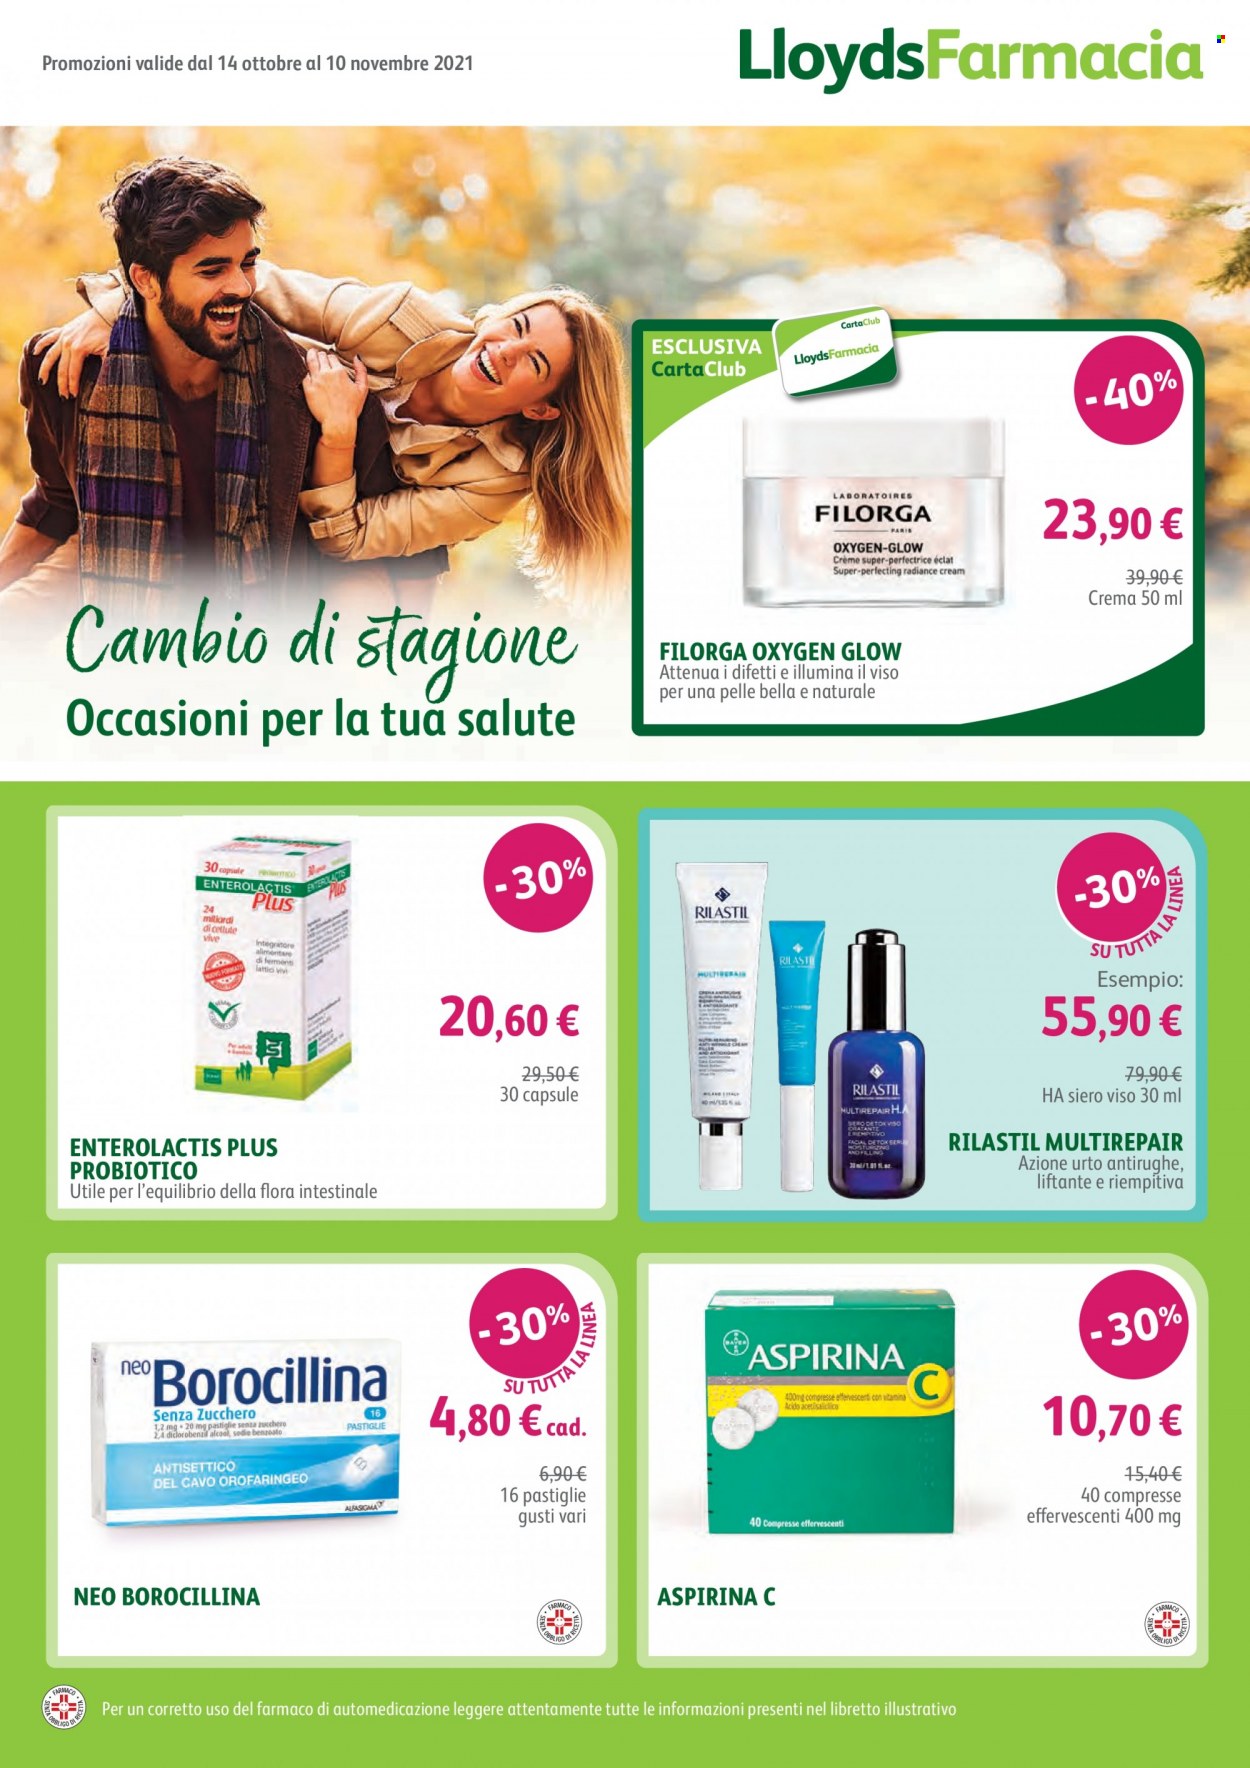 thumbnail - Volantino Lloyds Farmacia - 14/10/2021 - 10/11/2021 - Prodotti in offerta - Rilastil, Filorga, flora intestinale, Aspirina, Neo Borocillina. Pagina 1.